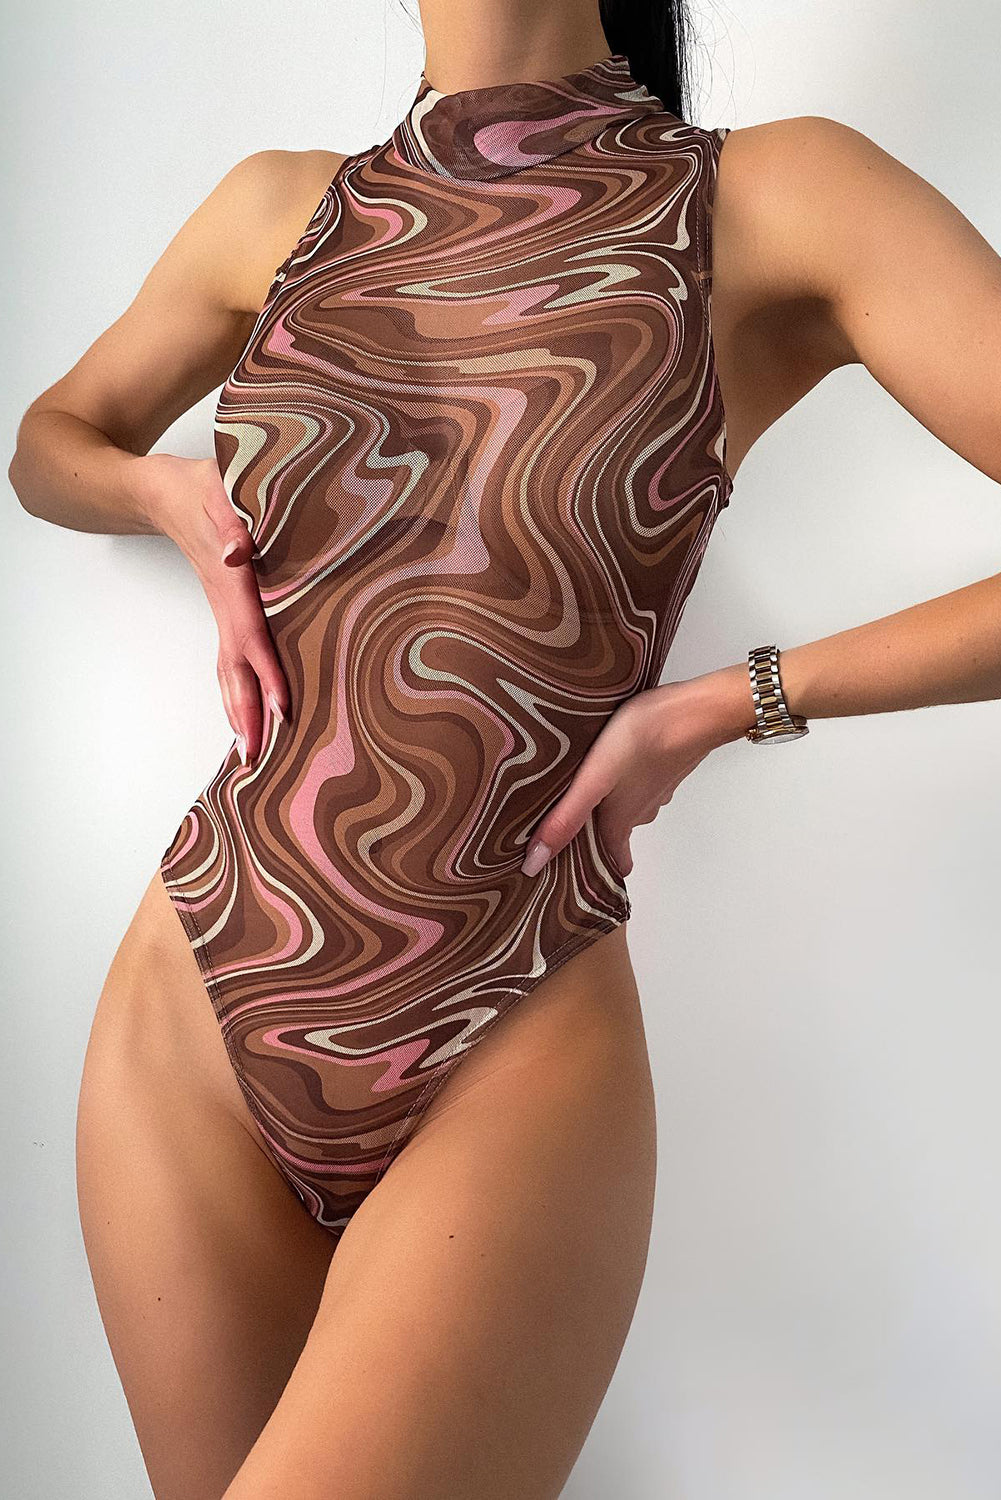 Brown Abstract Swirl High Neck Mesh Sleeveless Bodysuit